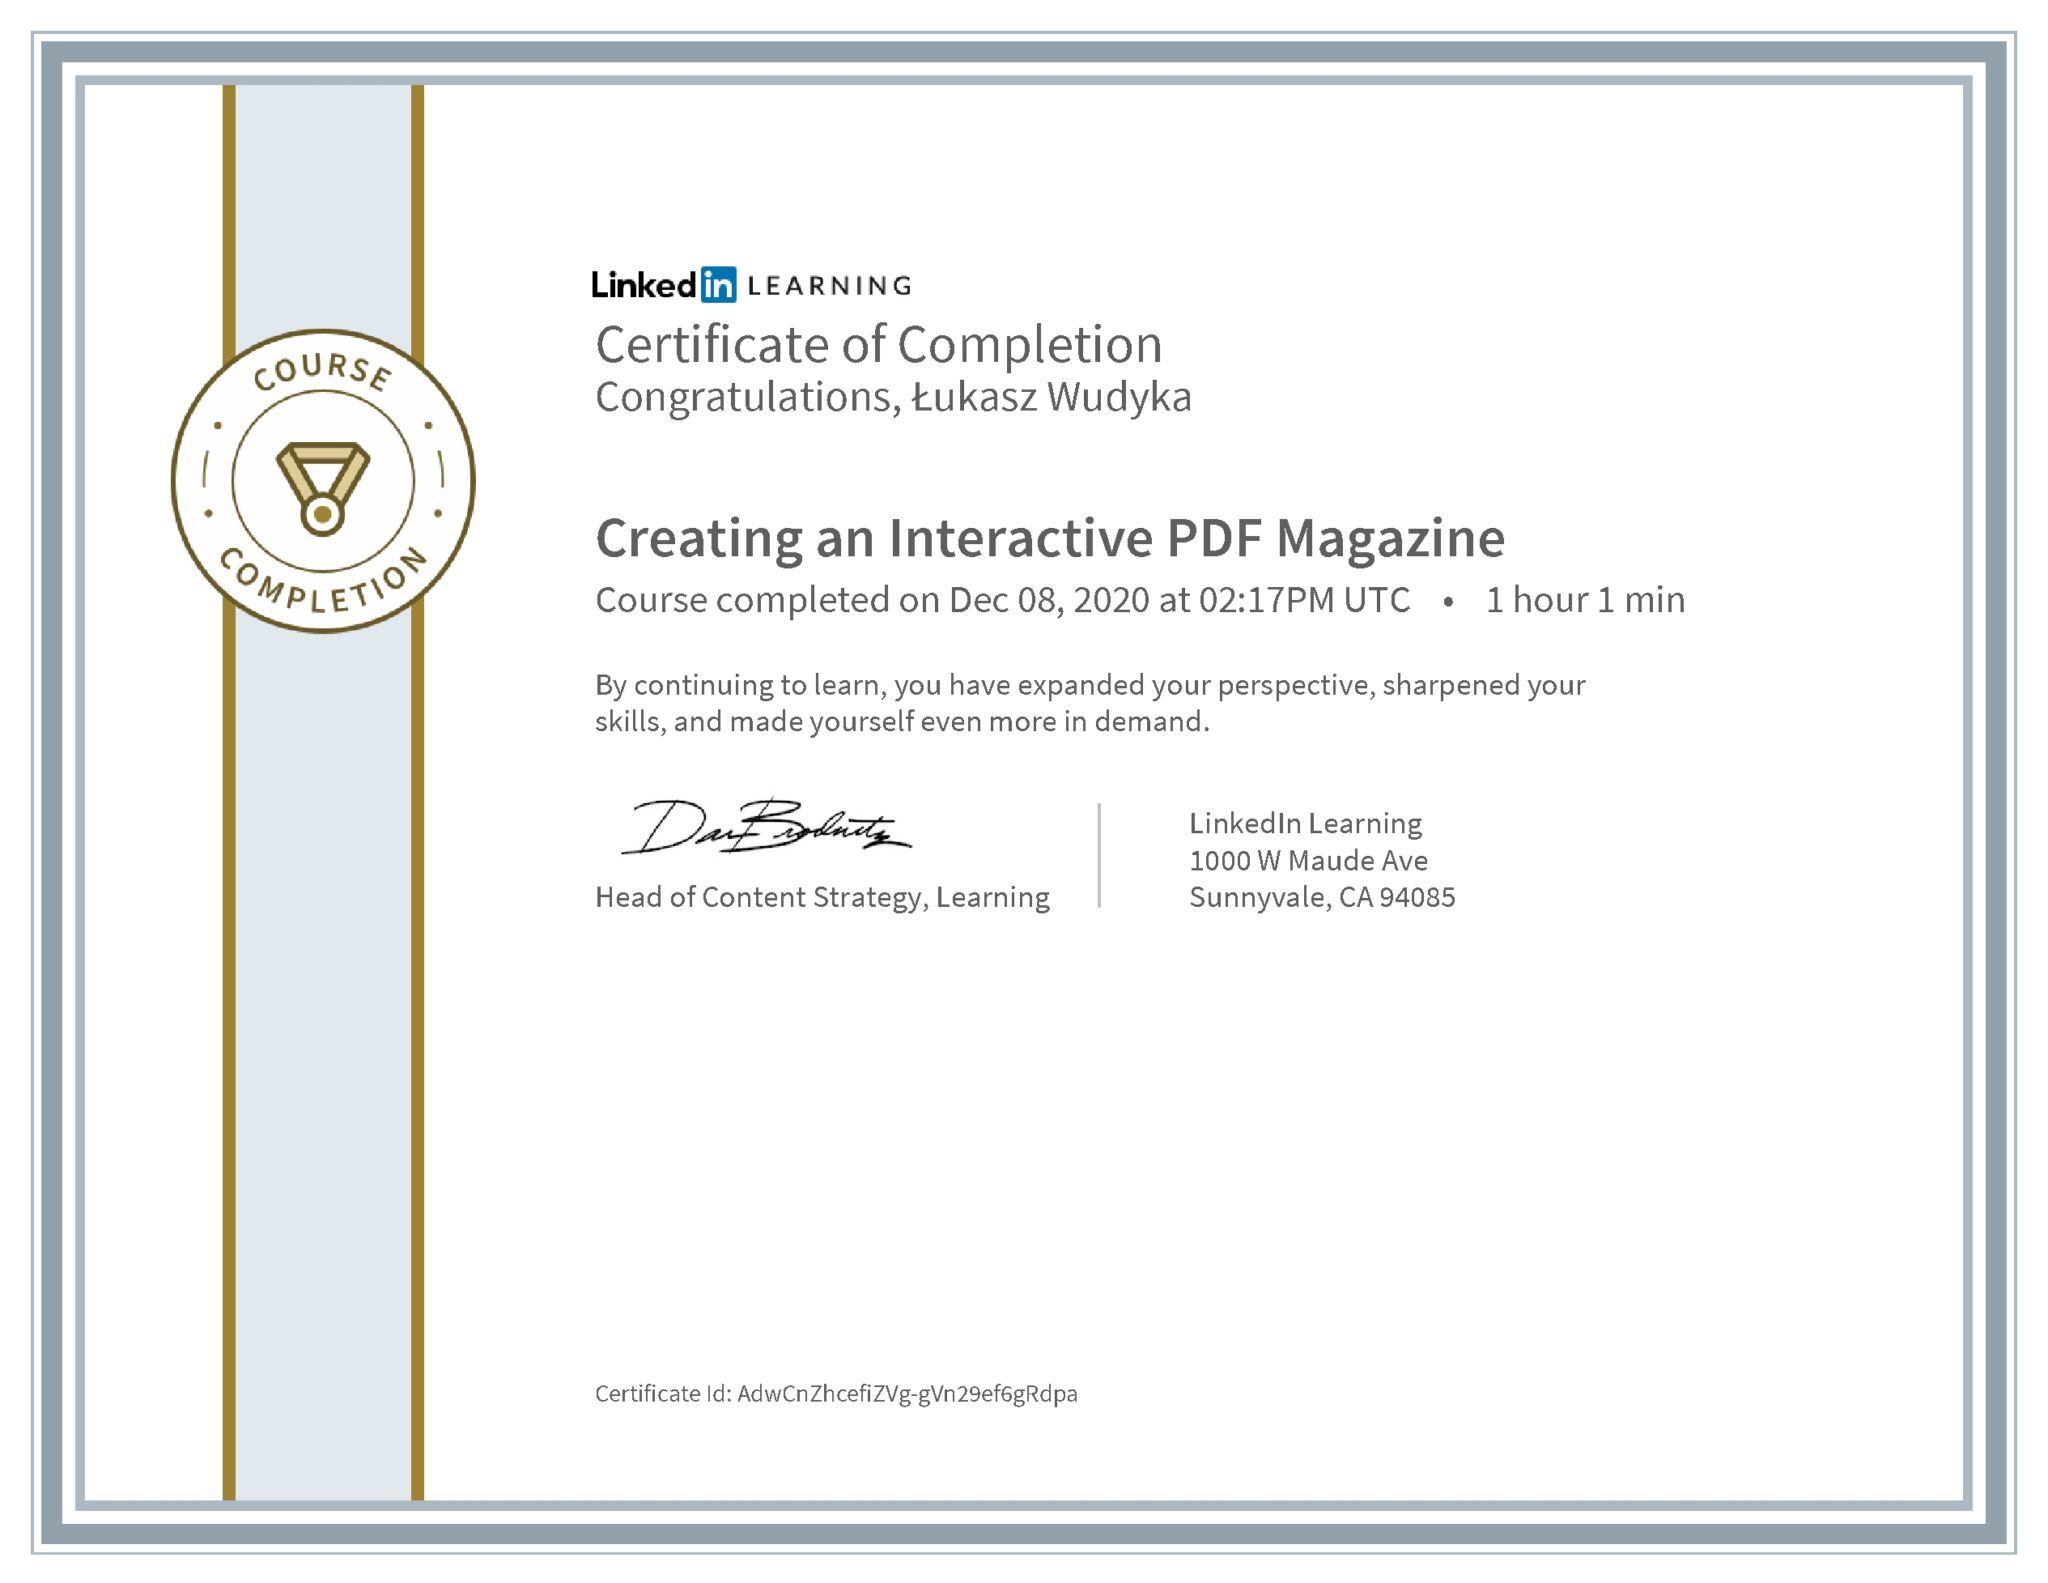 Łukasz Wudyka certyfikat LinkedIn Creating an Interactive PDF Magazine